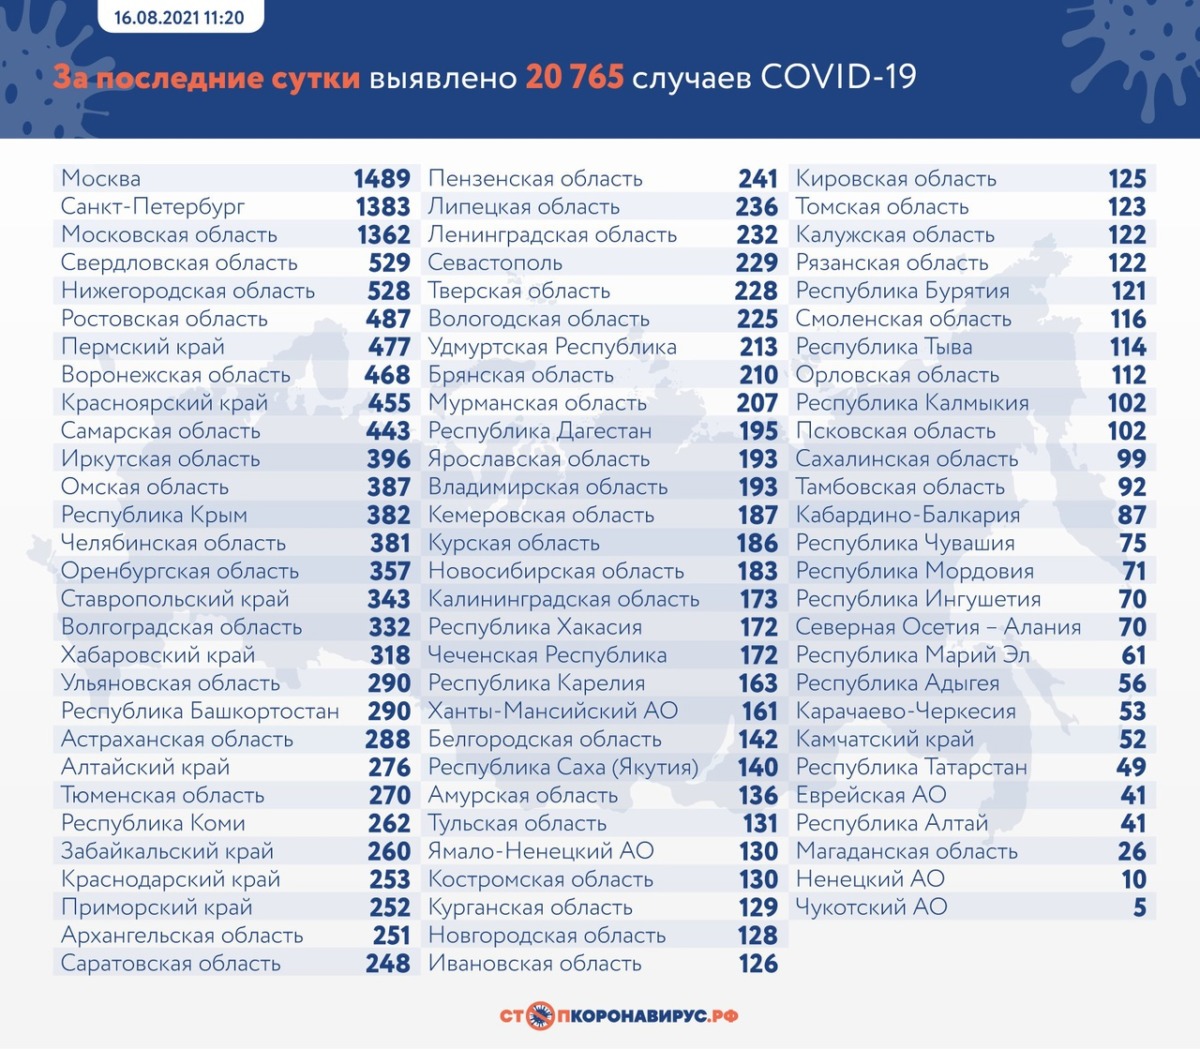 Оперативная статистика по коронавирусу в России на 16 августа